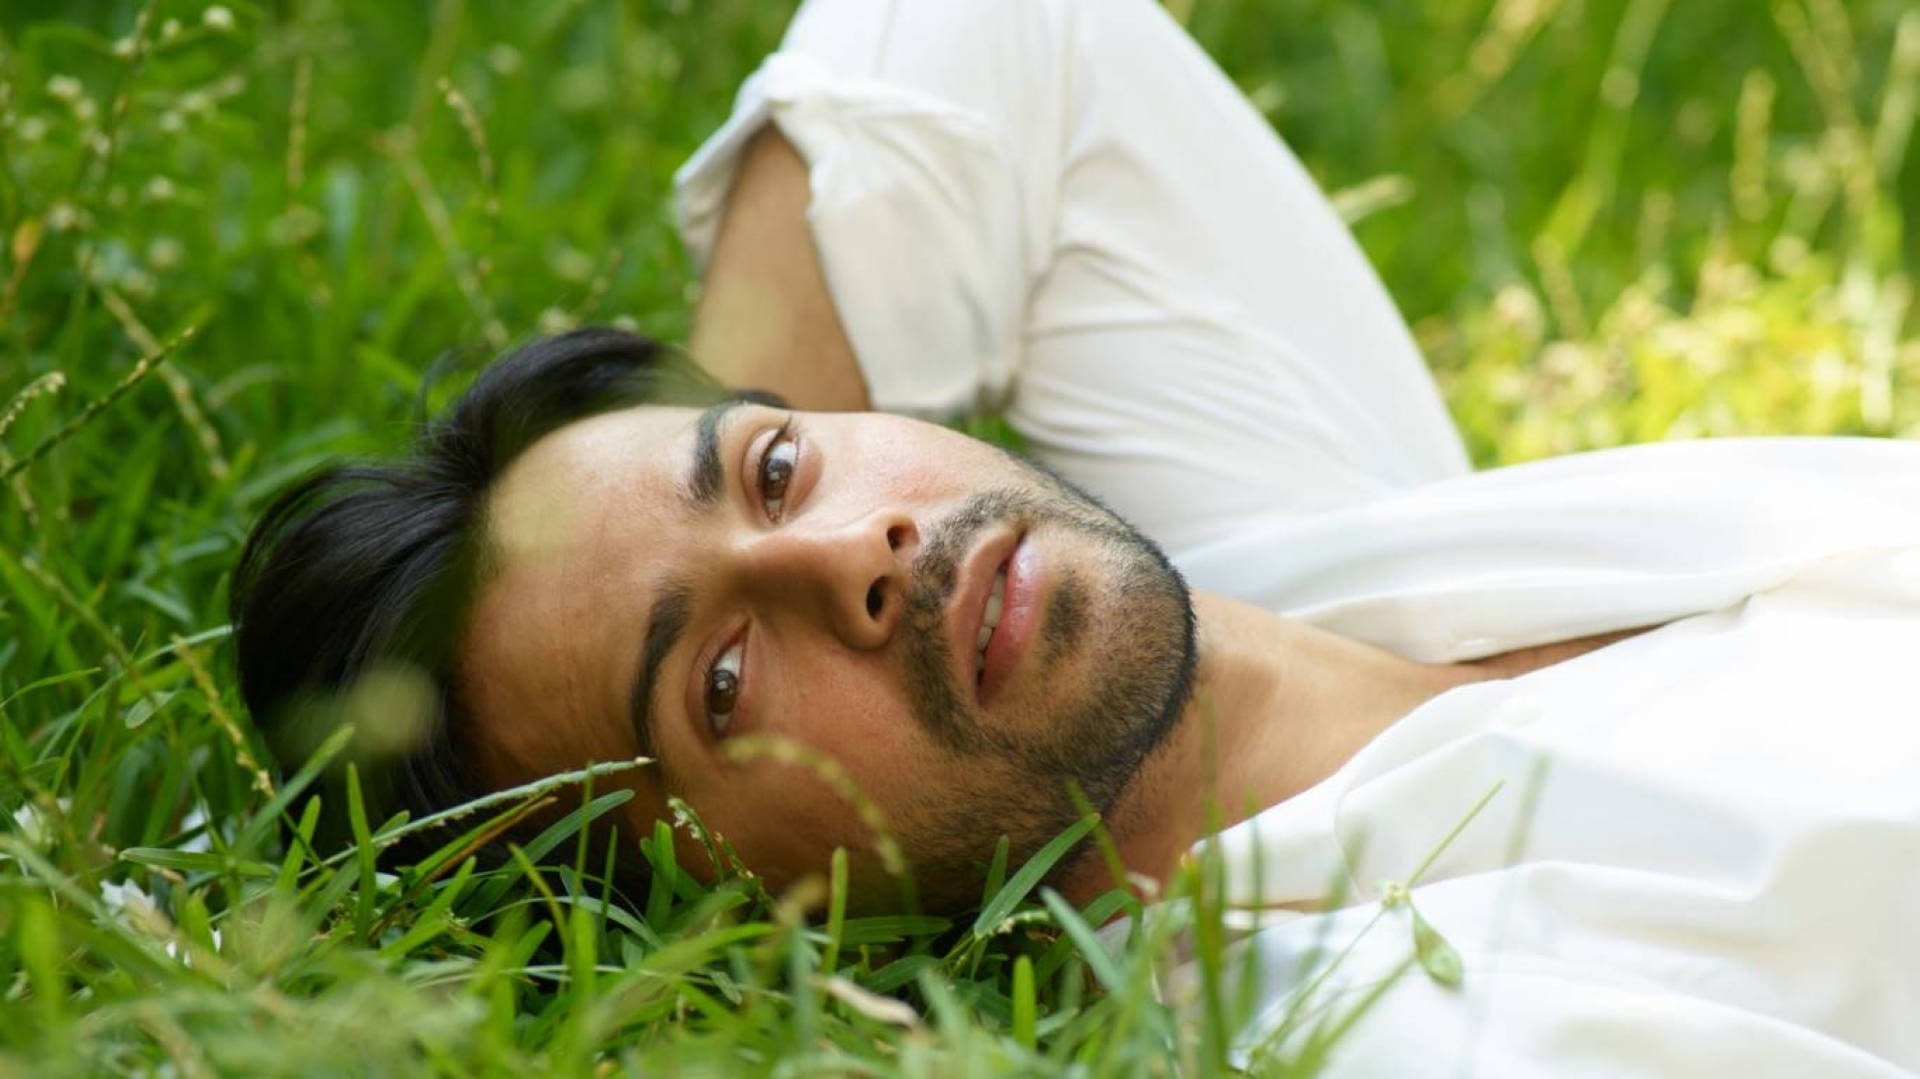 Varun Dhawan On The Grass